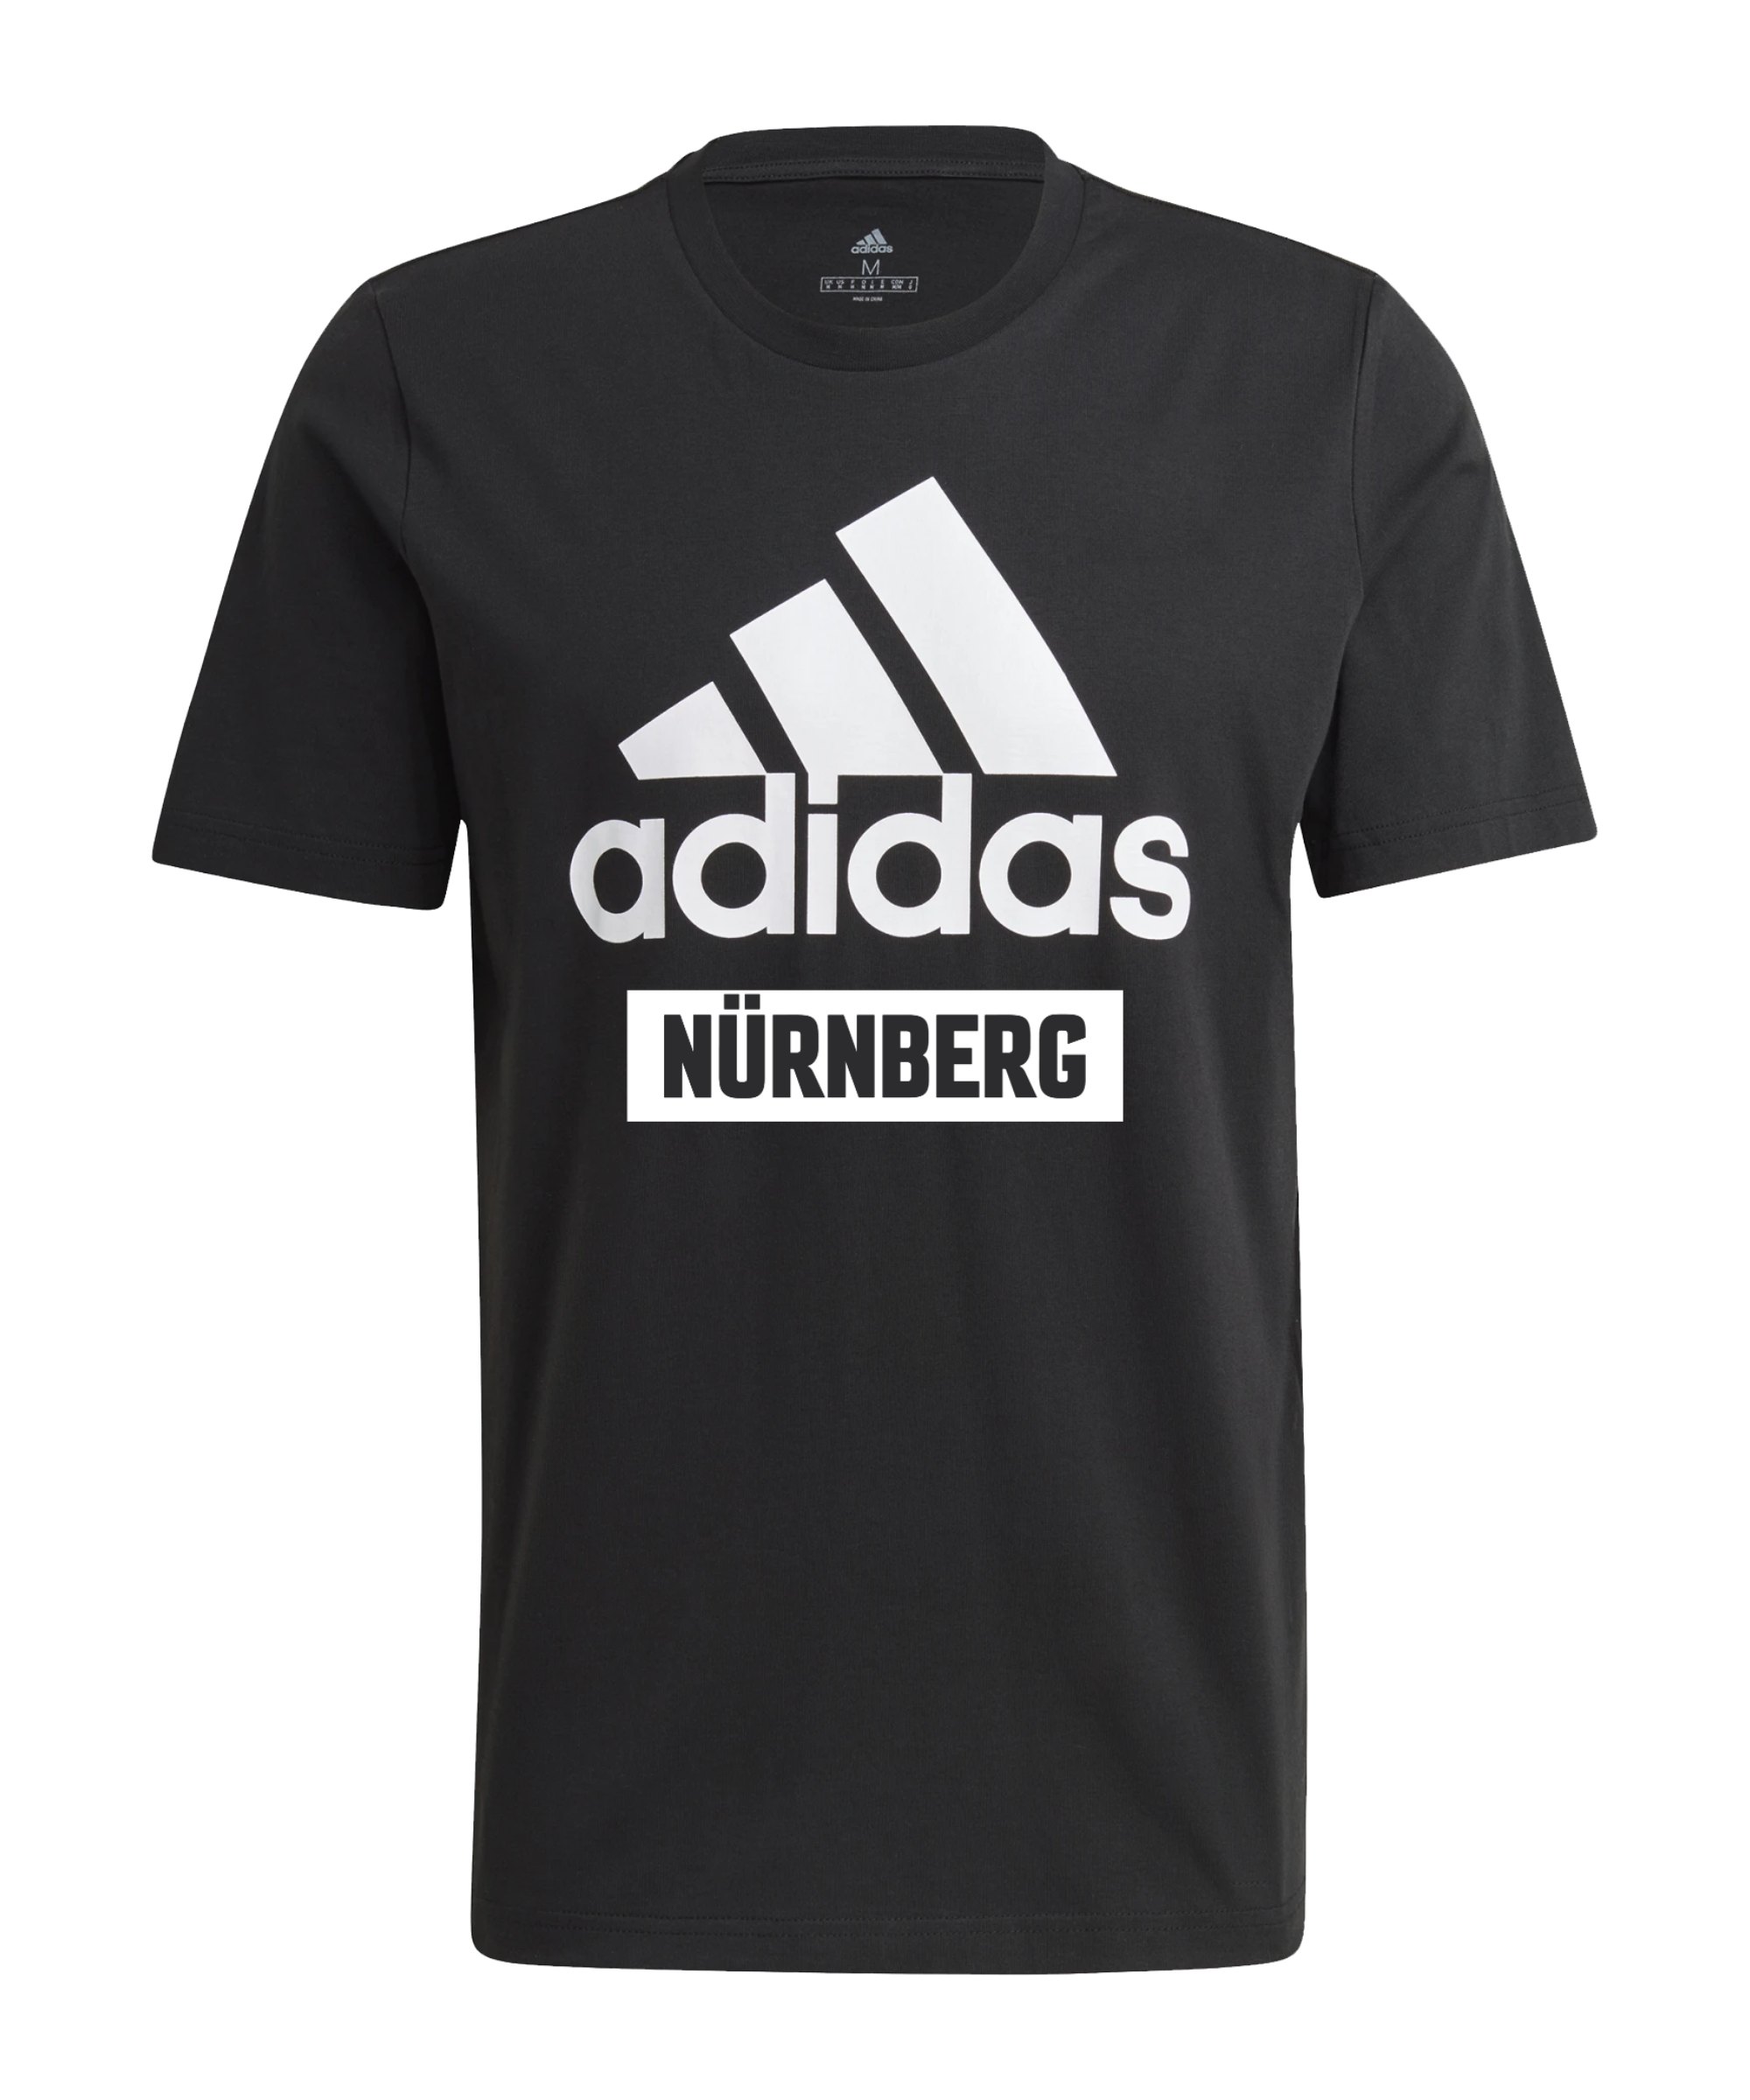 adidas 1. FC Nürnberg Logo T-Shirt Schwarz - schwarz